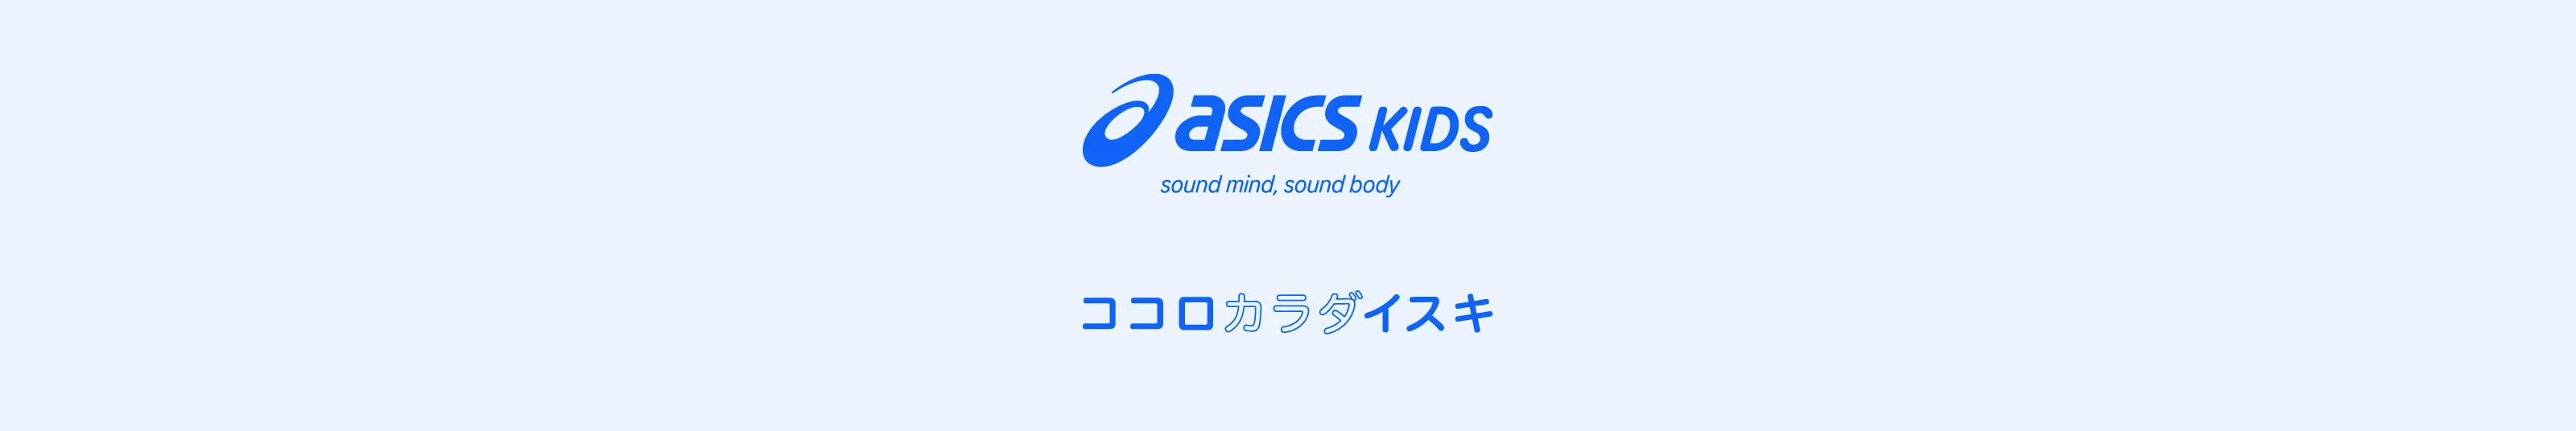 ASICS KIDS ココロカラダイスキ ロゴ